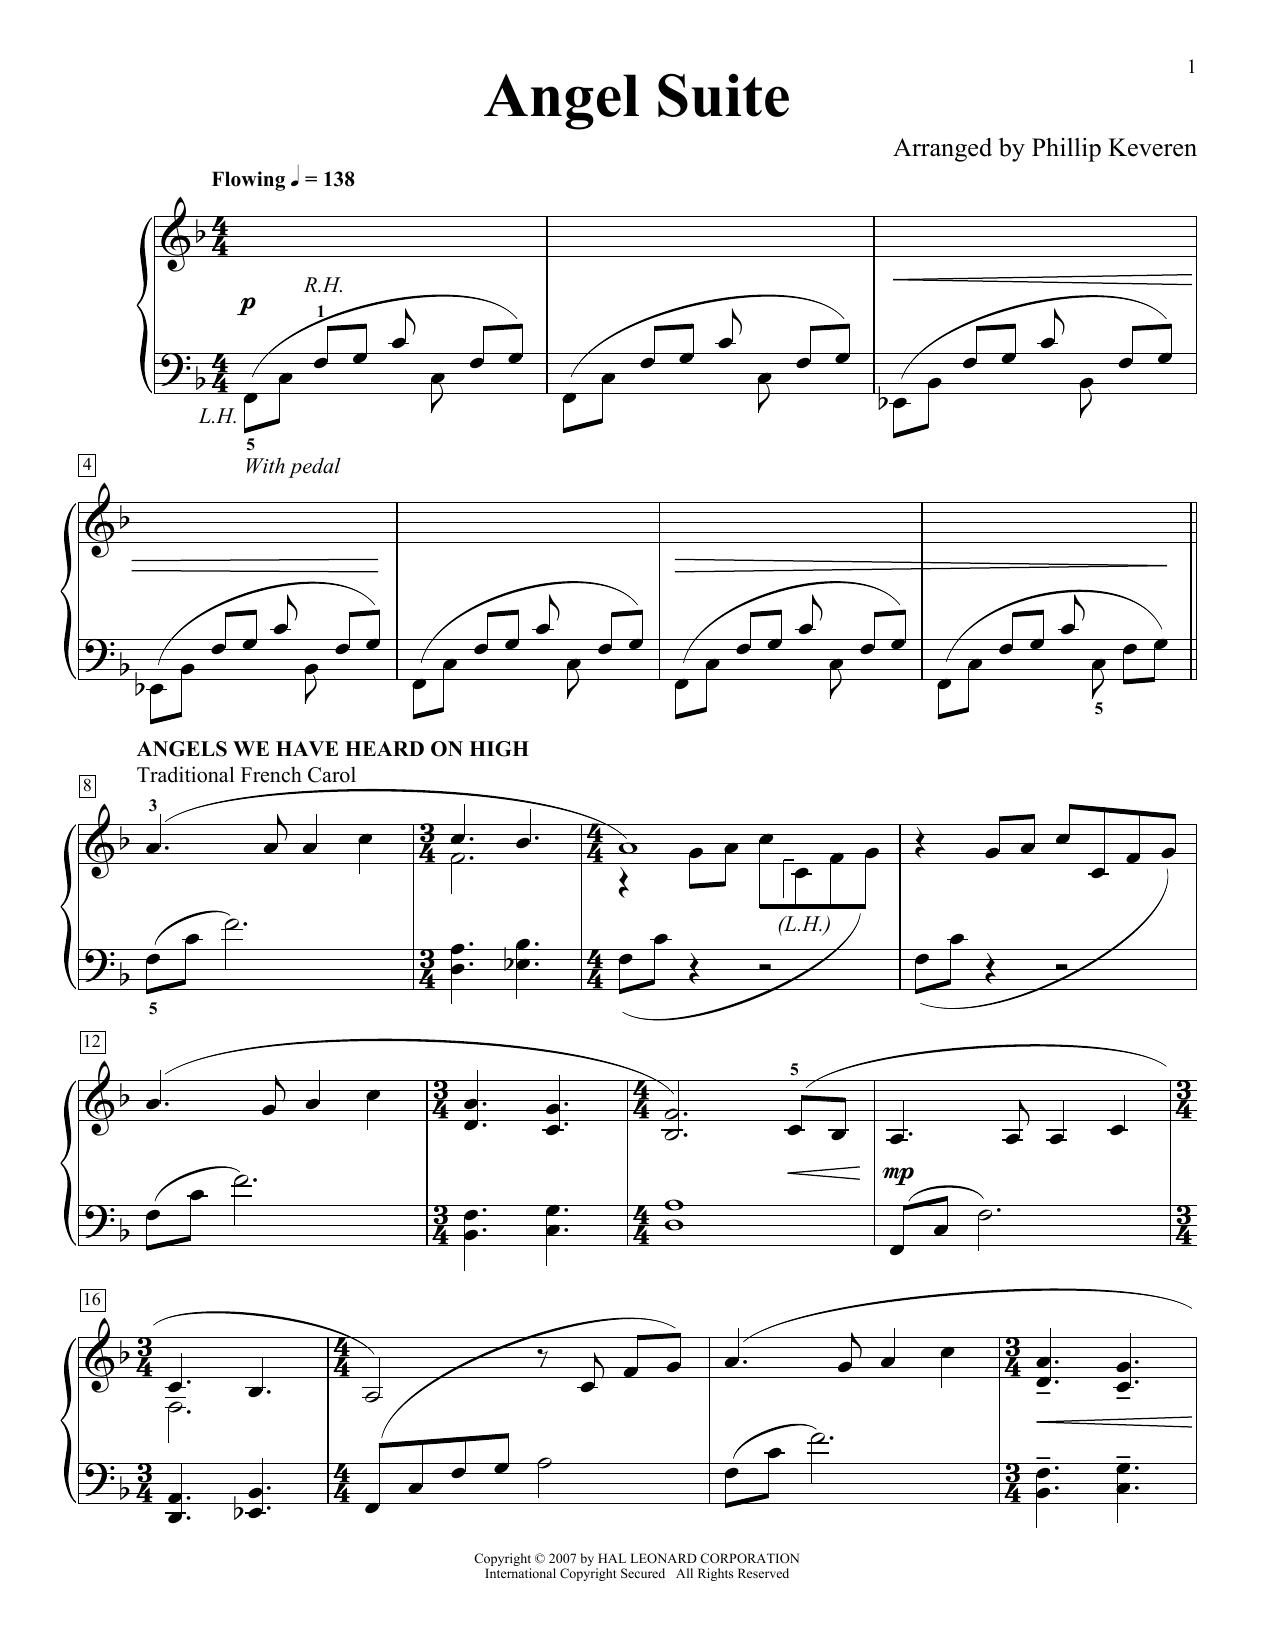 Traditional French Carol Angel Suite (arr. Phillip Keveren) sheet music notes printable PDF score